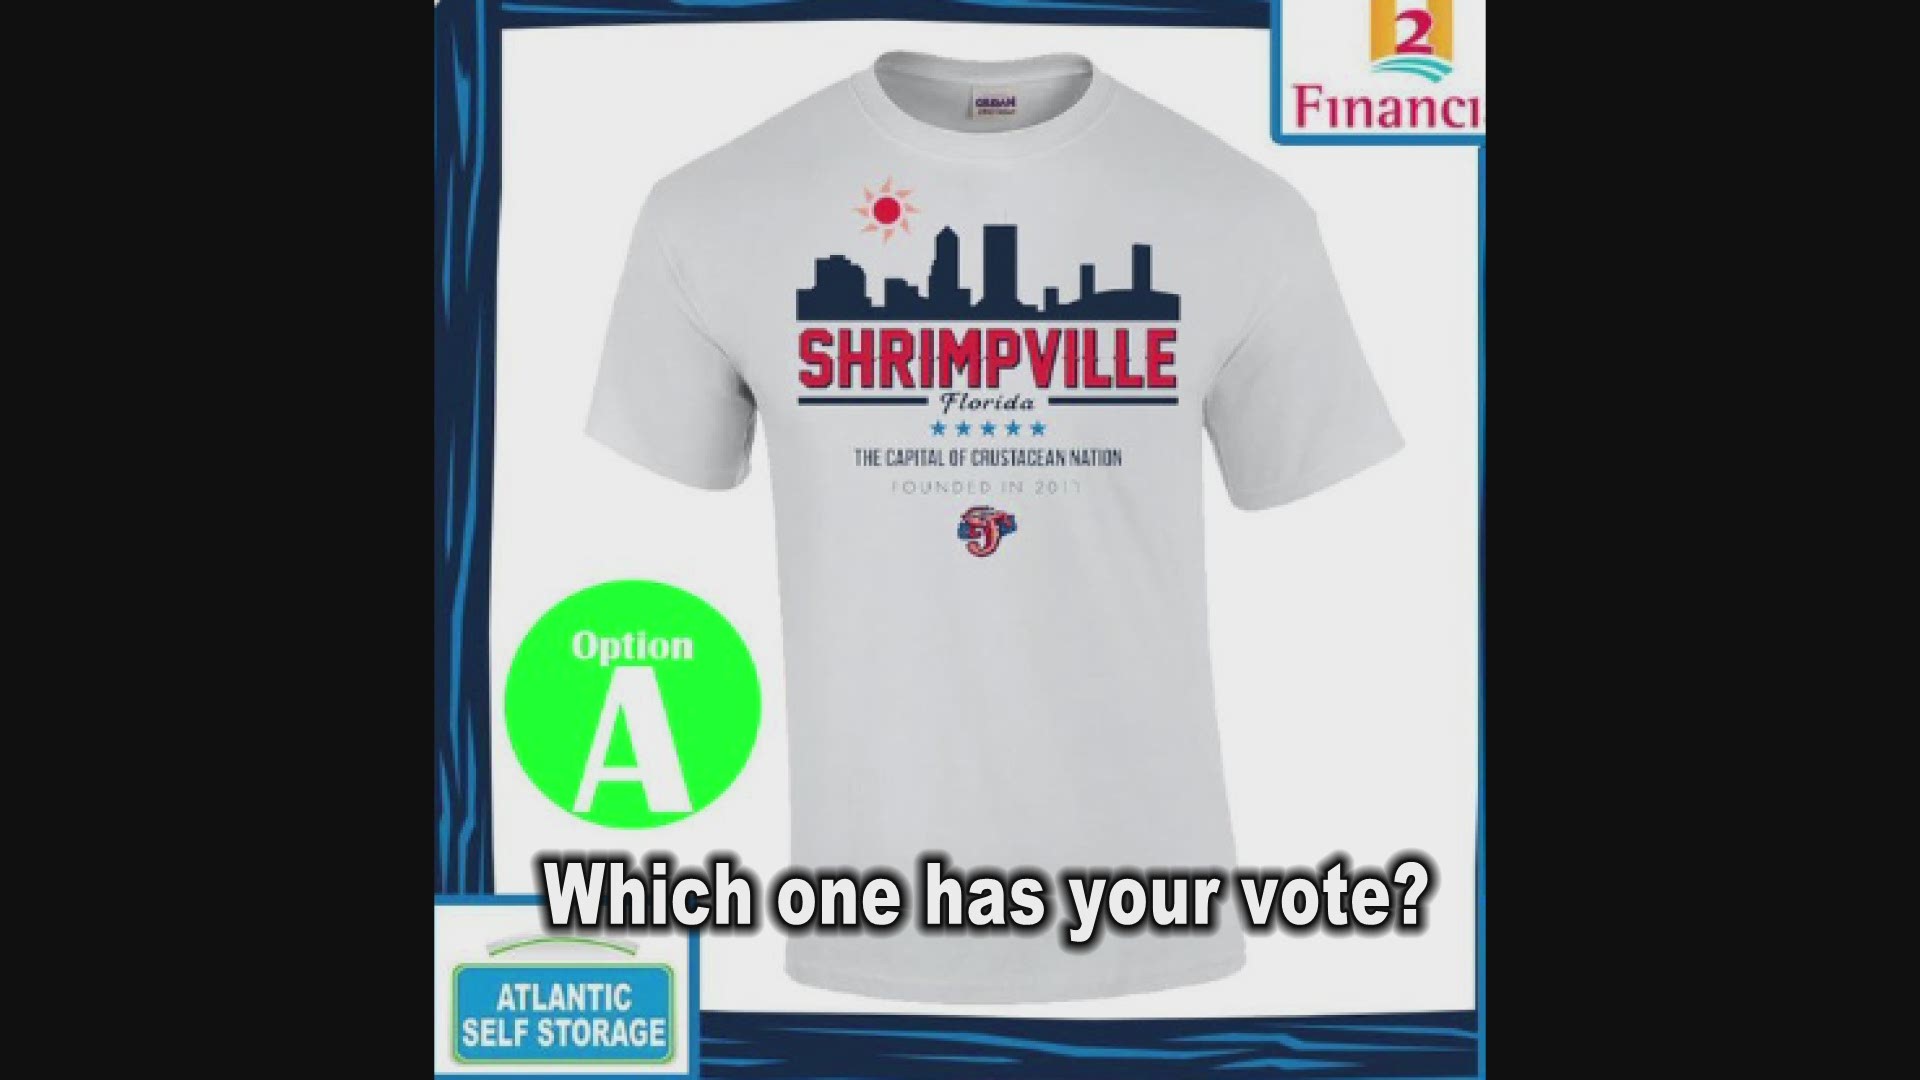 Jacksonville Jumbo Shrimp t-shirt contest